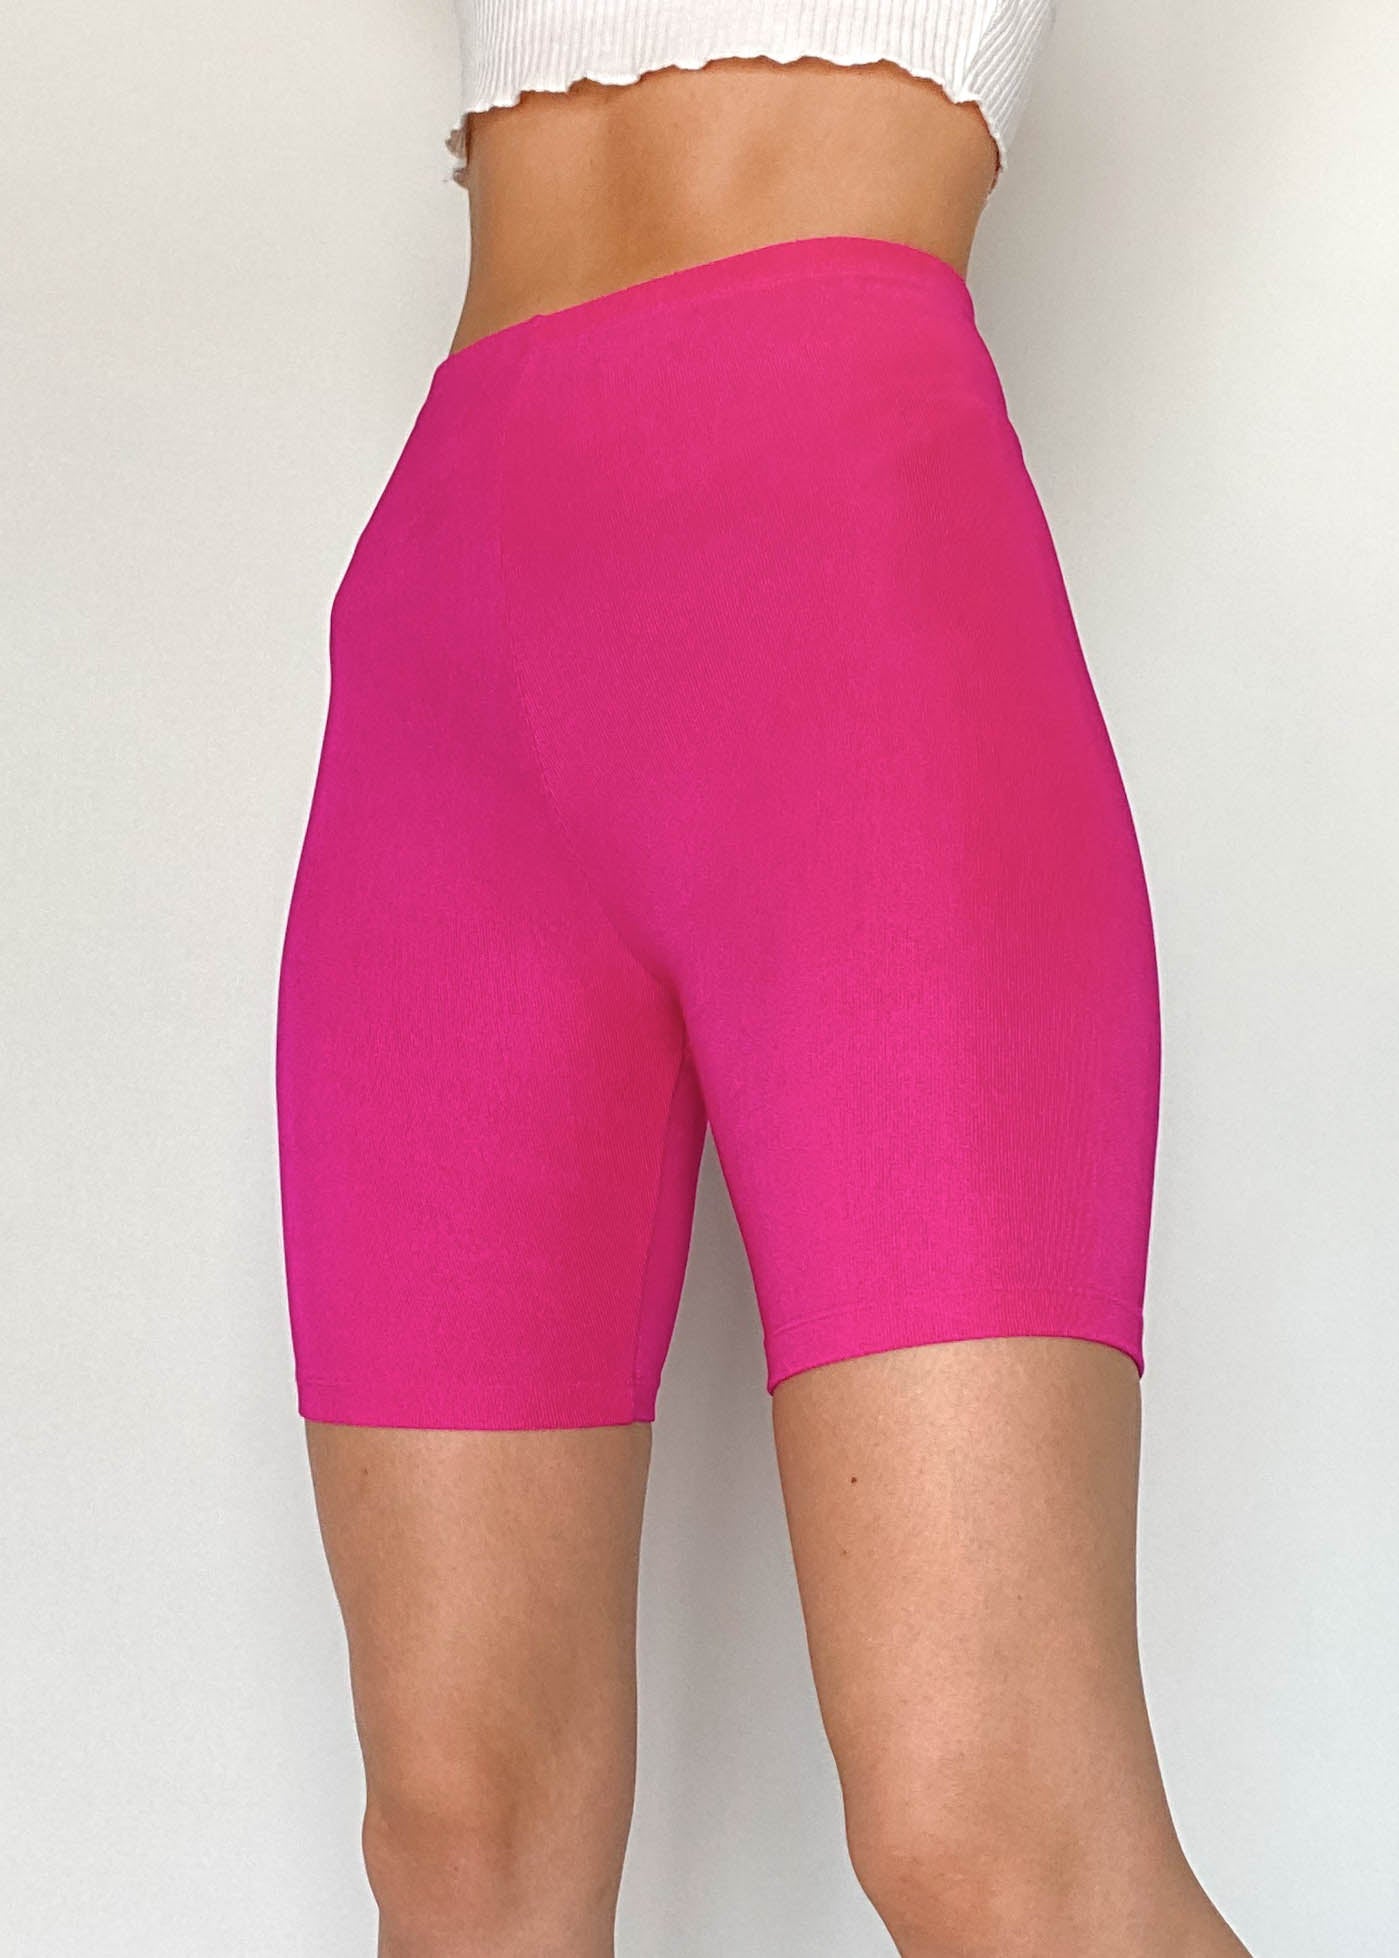 neon pink bike shorts